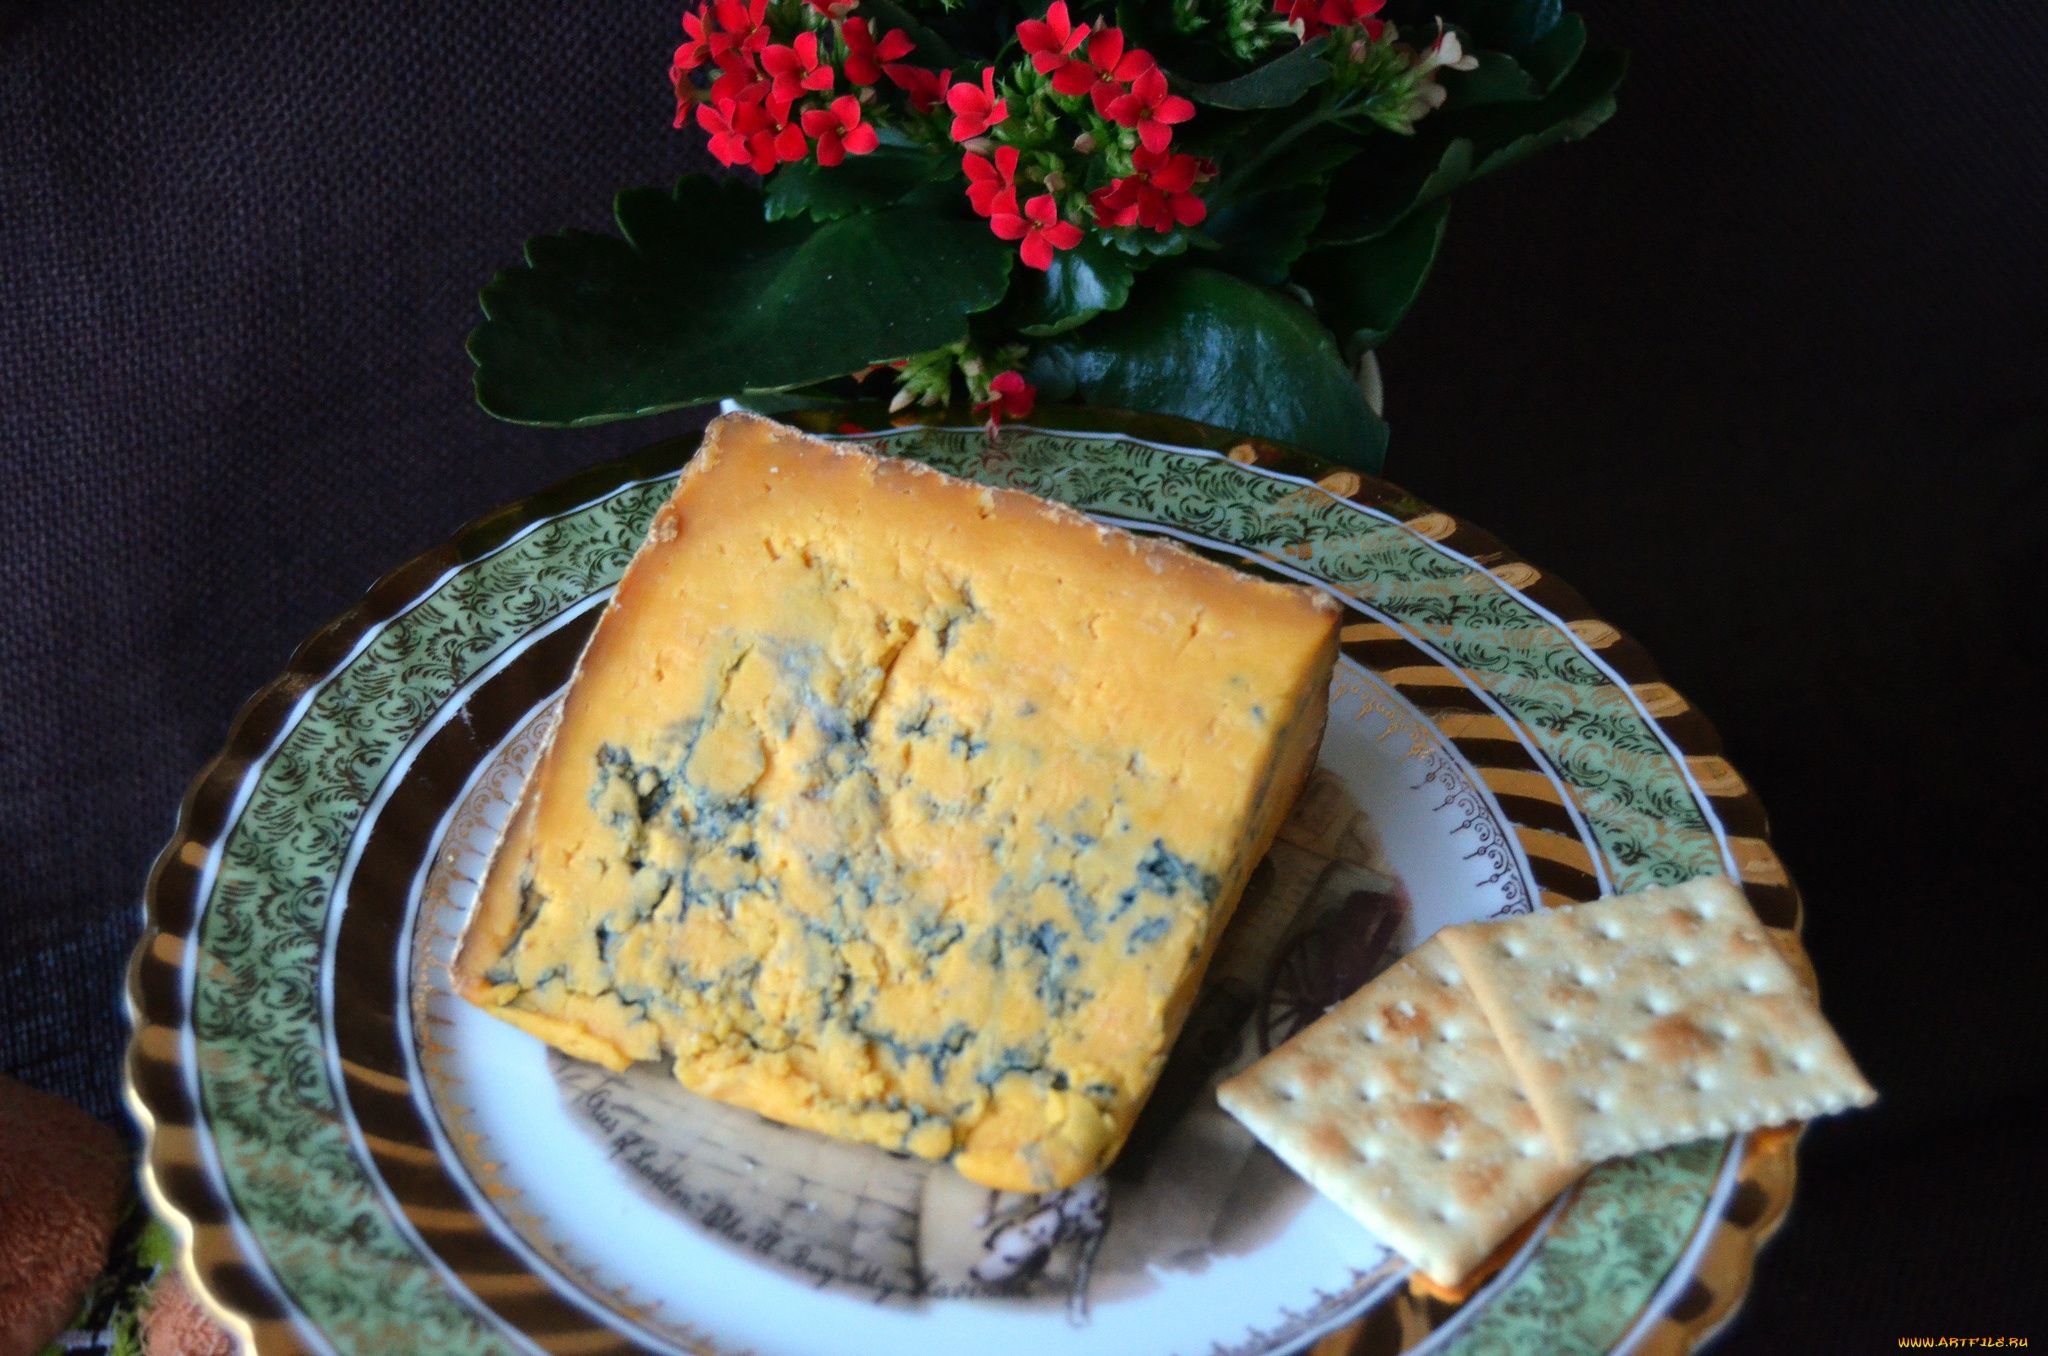 shropshire, blue, еда, сырные, изделия, сыр